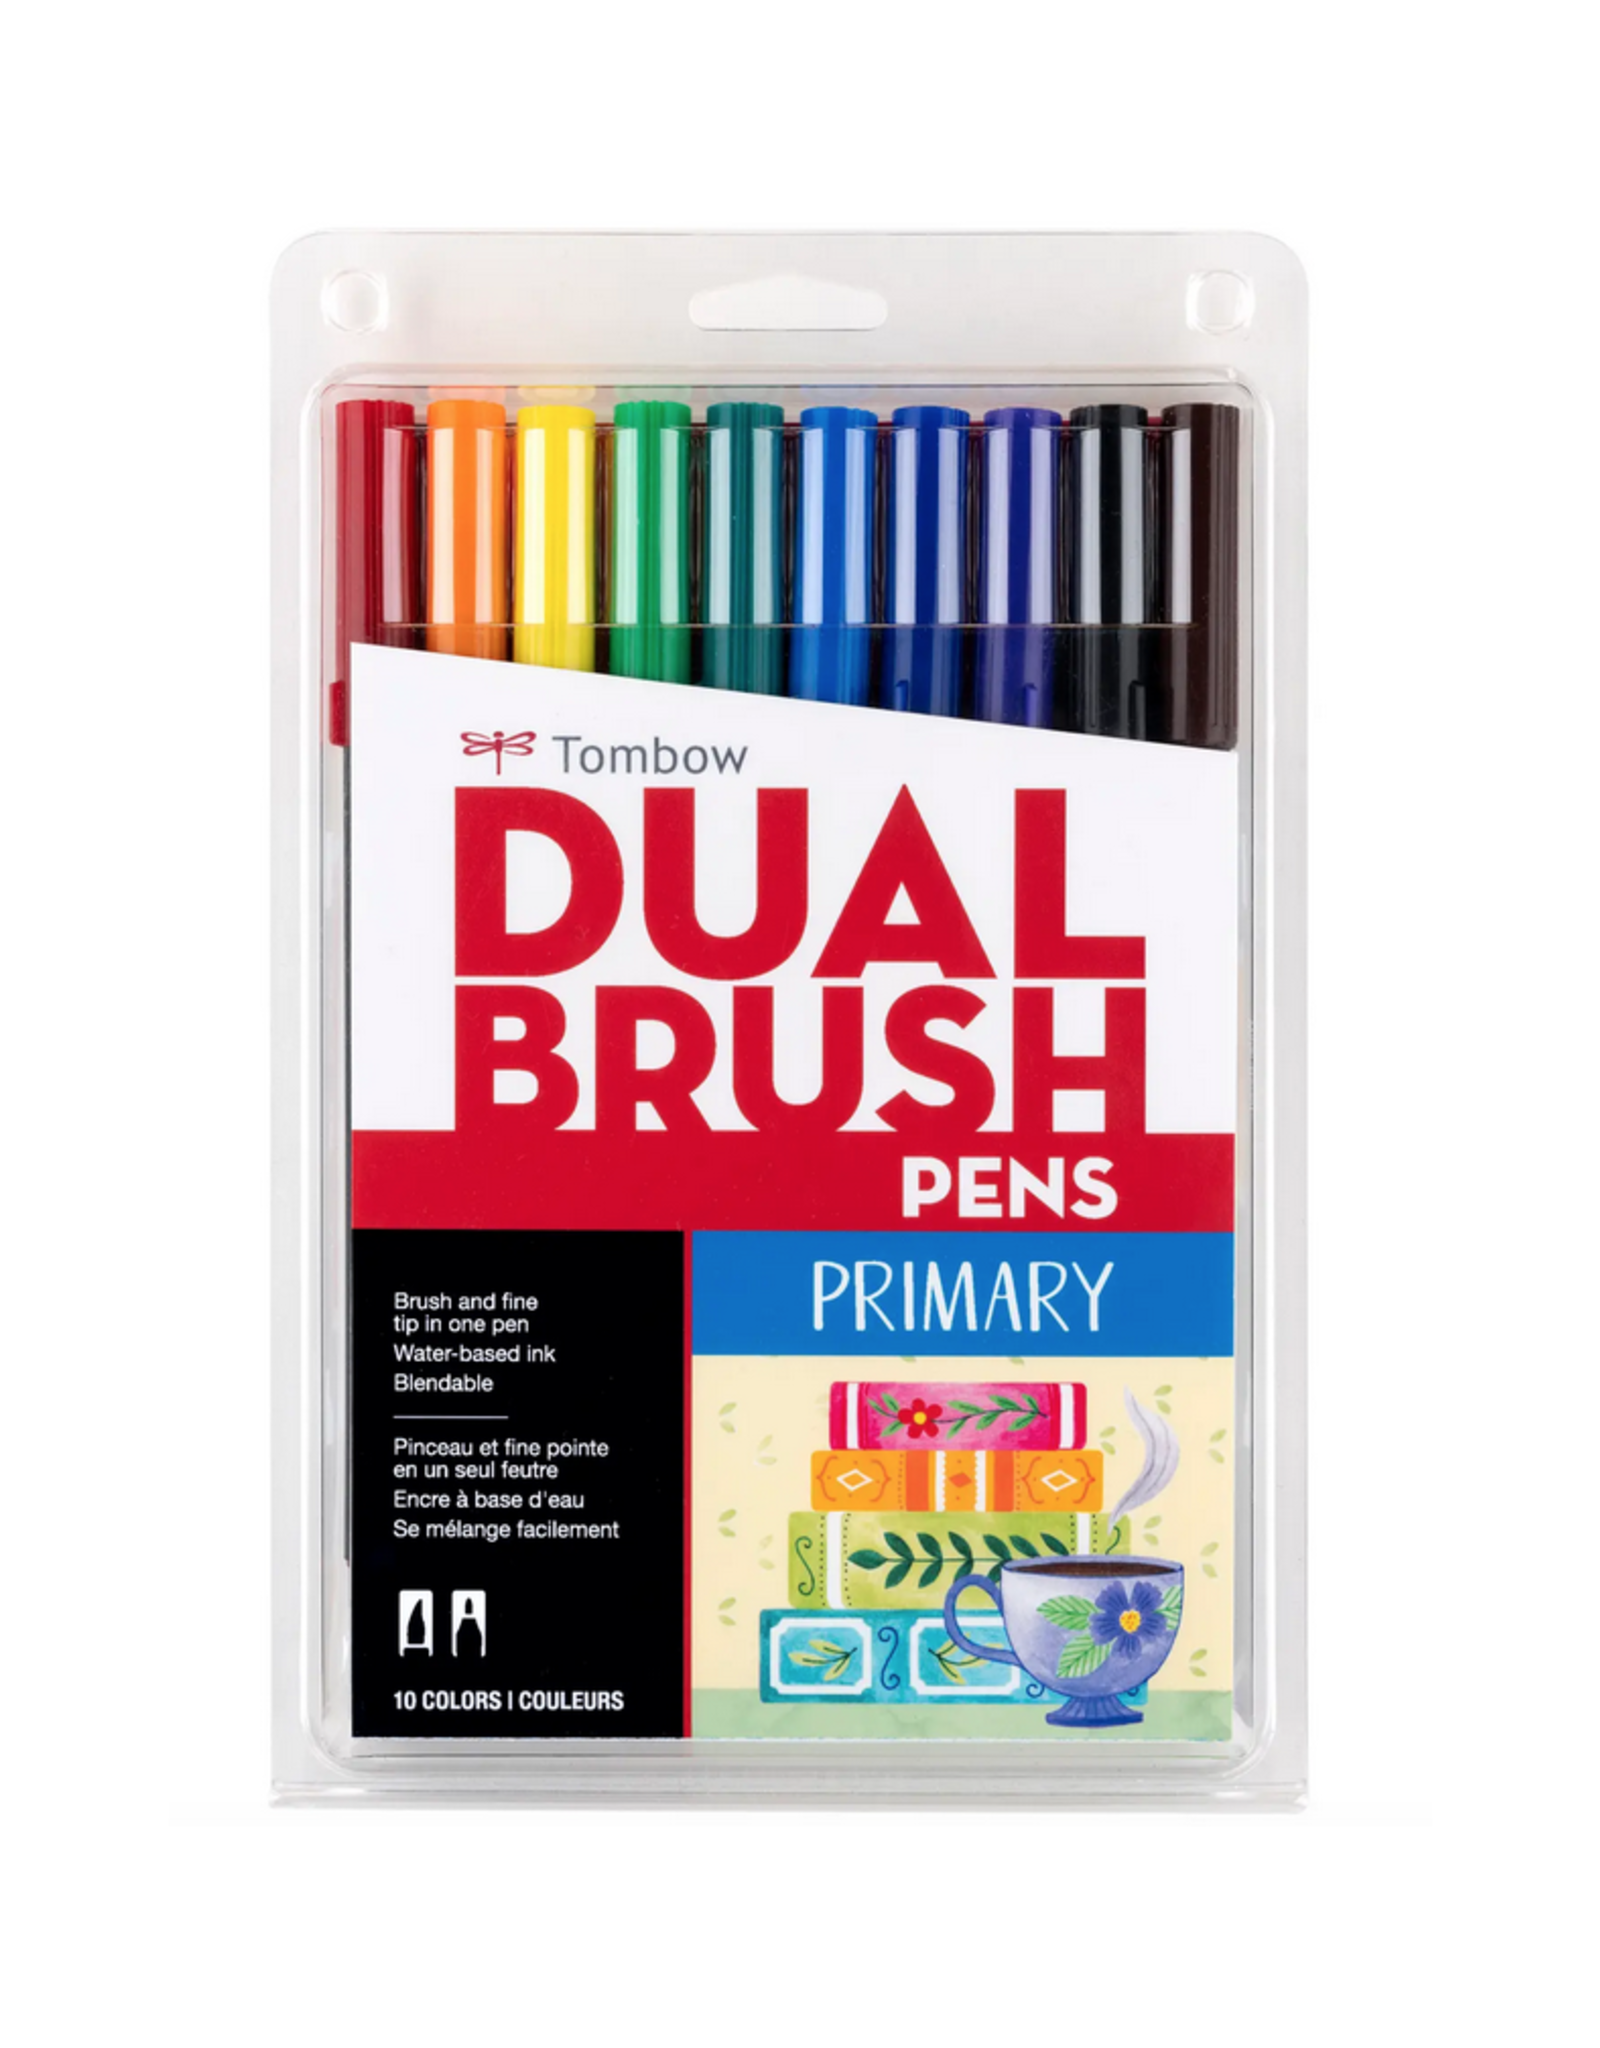 Dual Brush Pen Art Markers: Primary